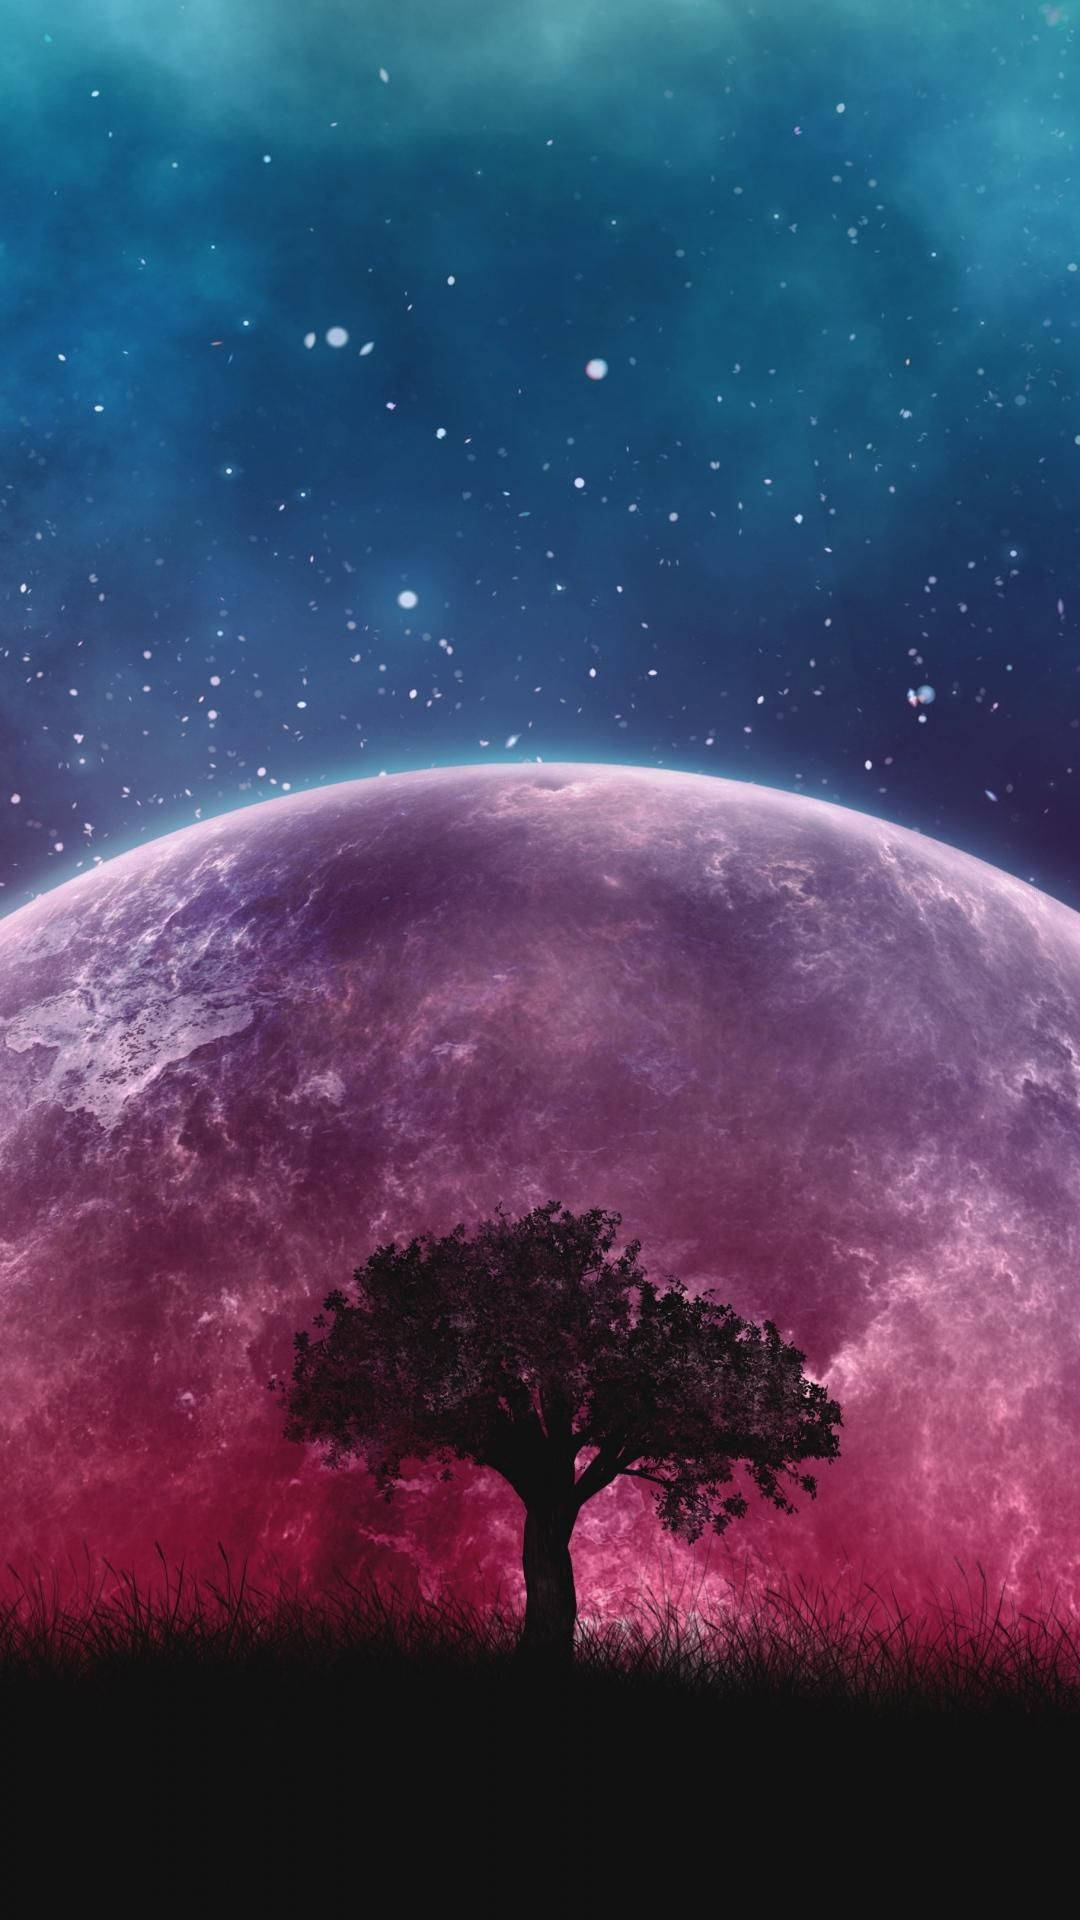 Tree Over A Cute Galaxy Wallpaper